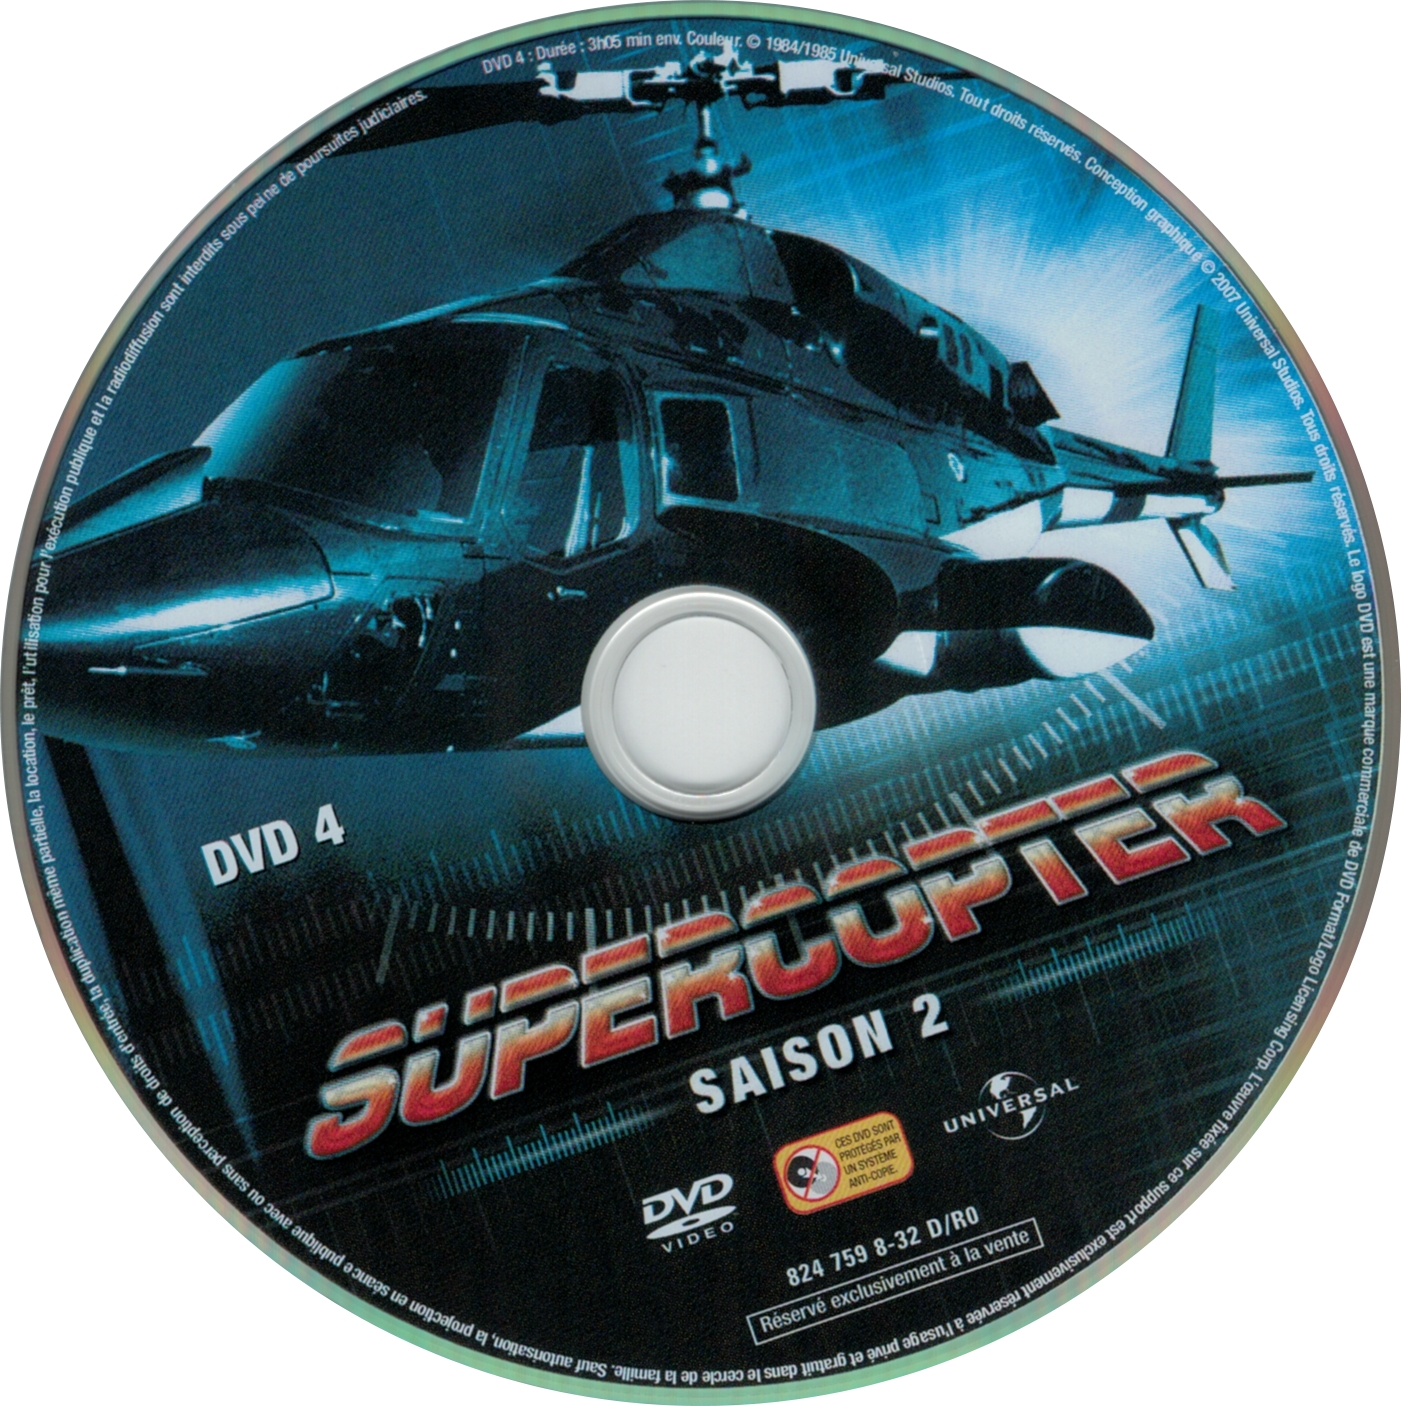 Supercopter Saison 2 DVD 4